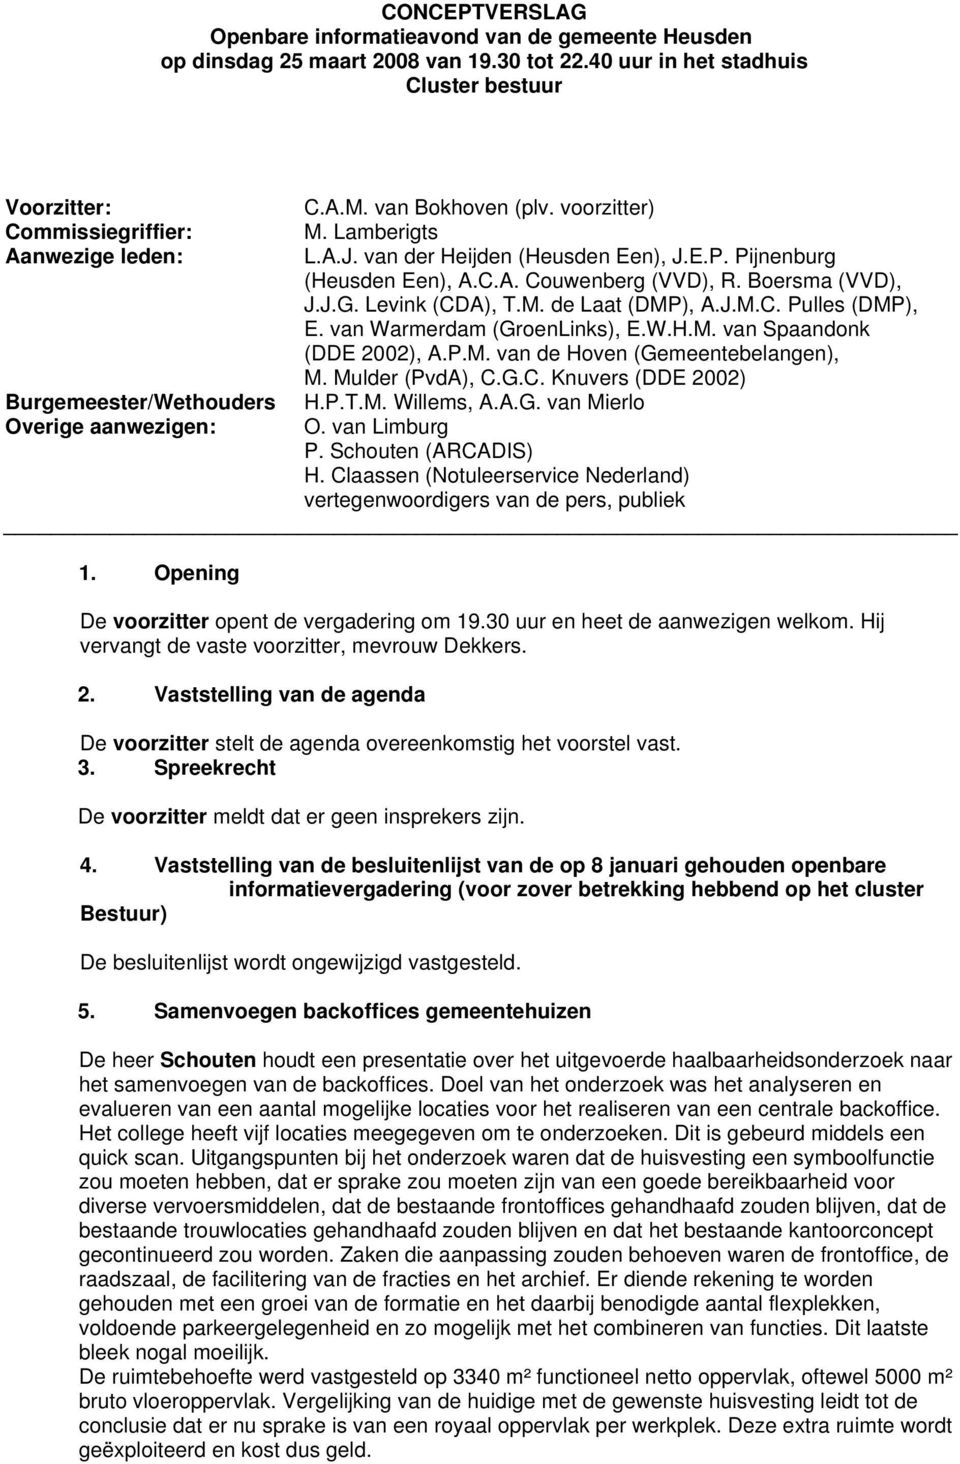 M. de Laat (DMP), A.J.M.C. Pulles (DMP), E. van Warmerdam (GroenLinks), E.W.H.M. van Spaandonk (DDE 2002), A.P.M. van de Hoven (Gemeentebelangen), M. Mulder (PvdA), C.G.C. Knuvers (DDE 2002) Burgemeester/Wethouders H.